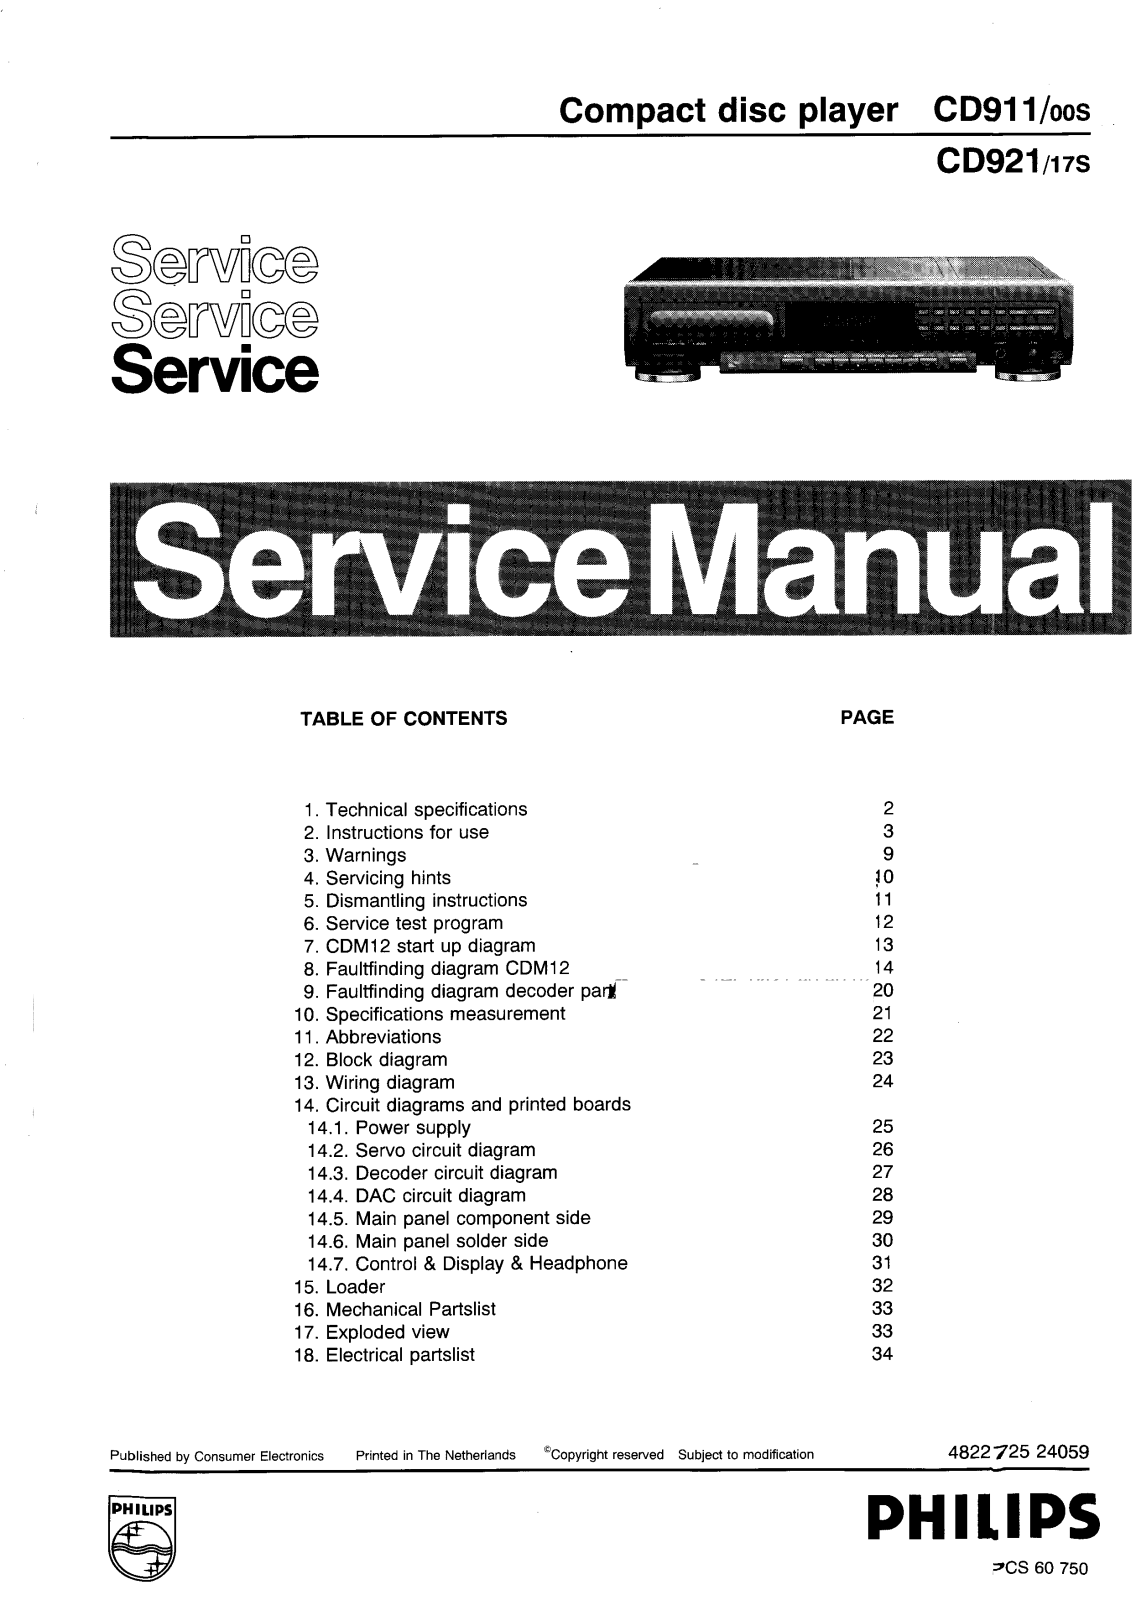 Philips CD-911, CD-921 Service manual